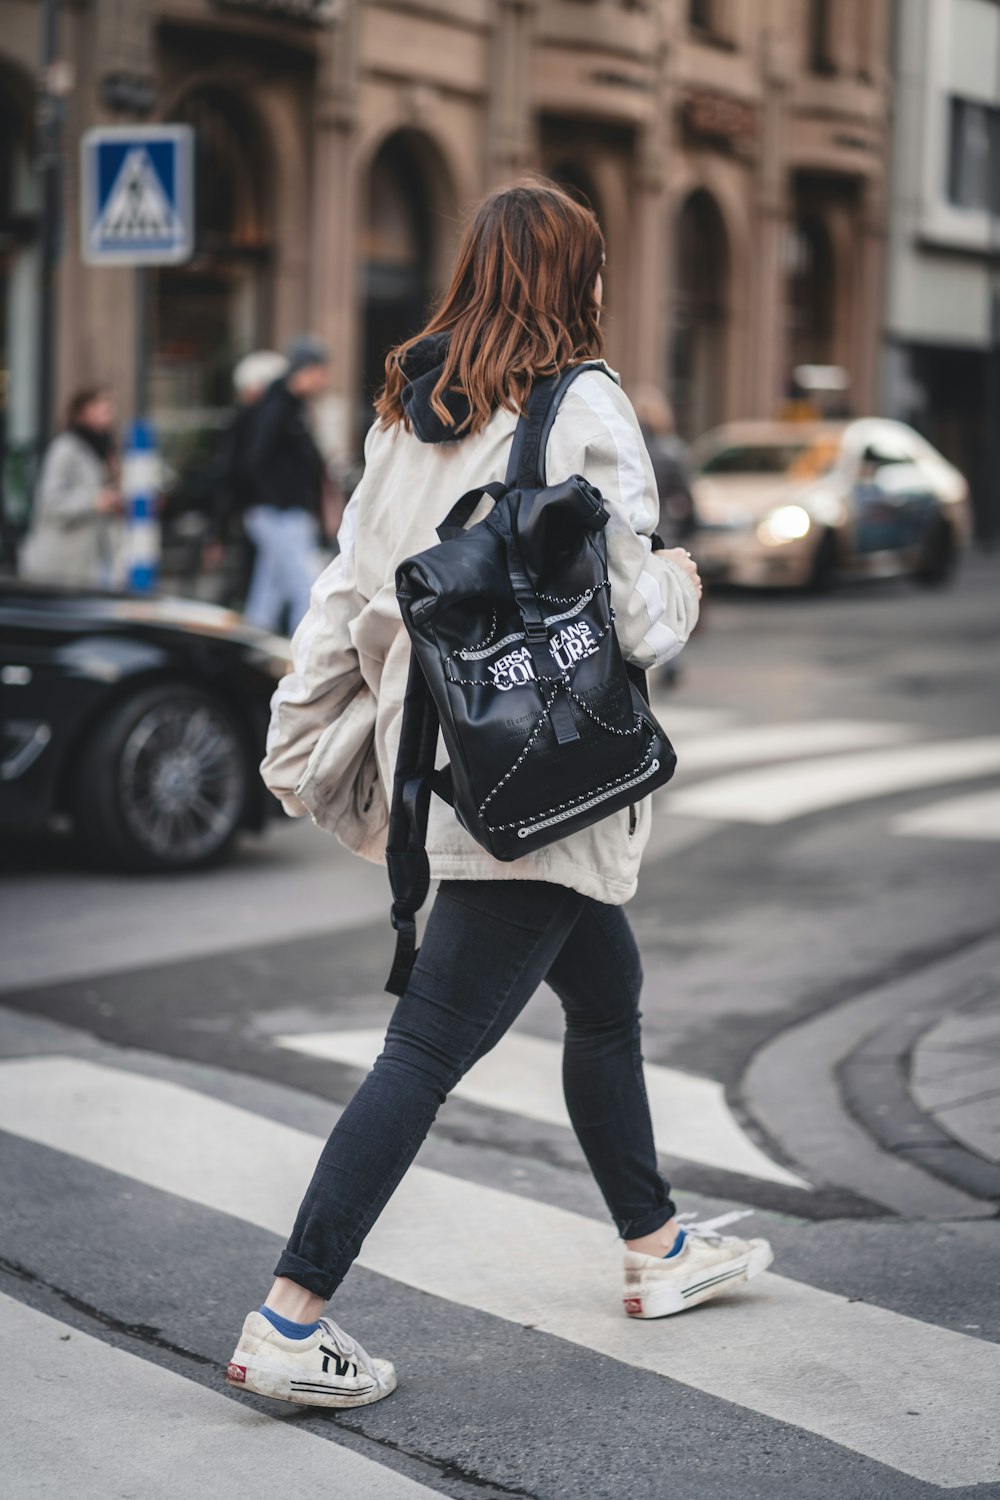 woman in black pants and white jacket walking on sidewalk during daytime